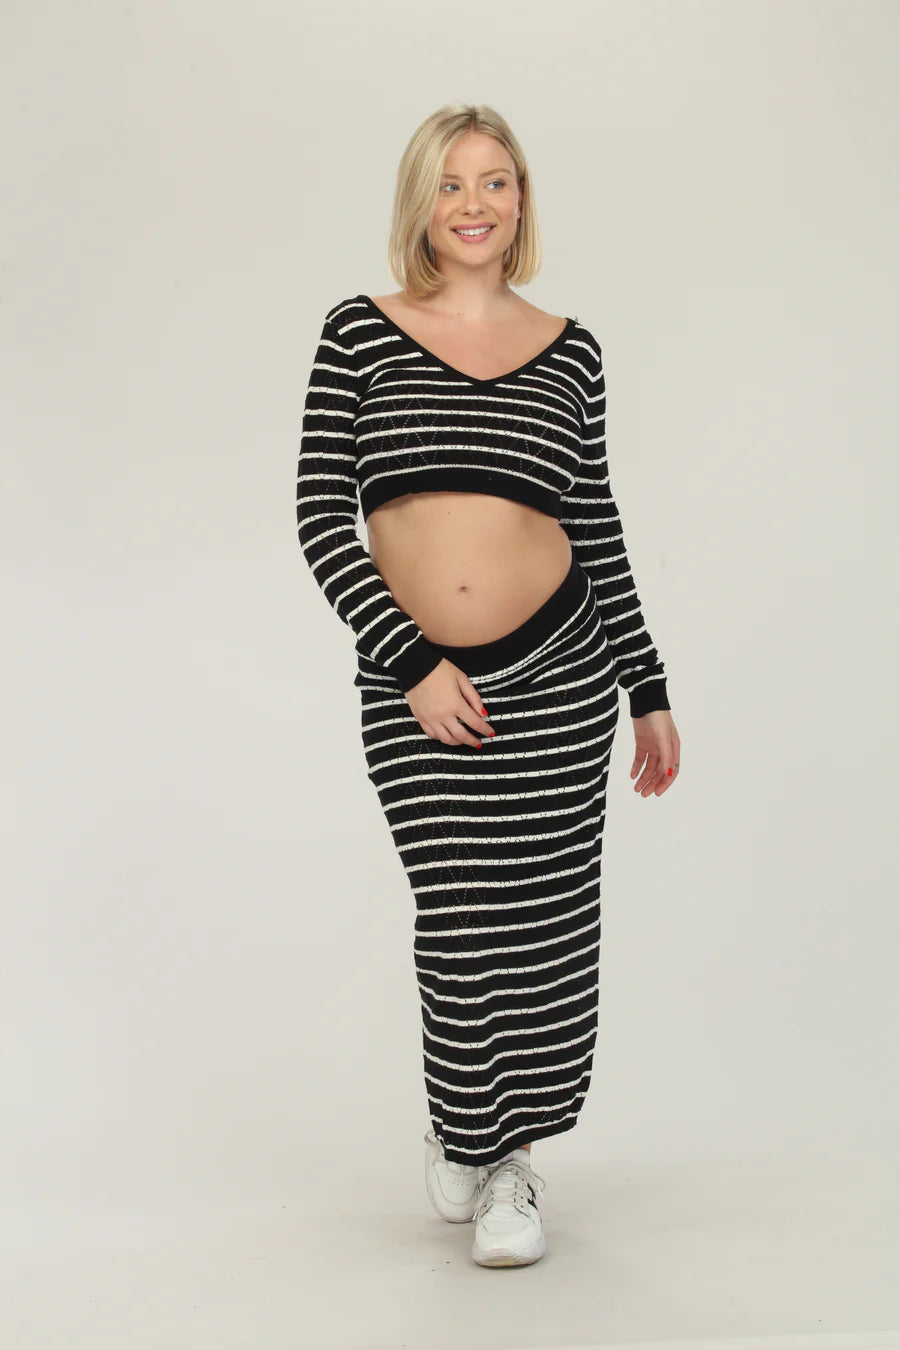 20% off your maternity wardrobe upgrade! - Seraphine Maternity